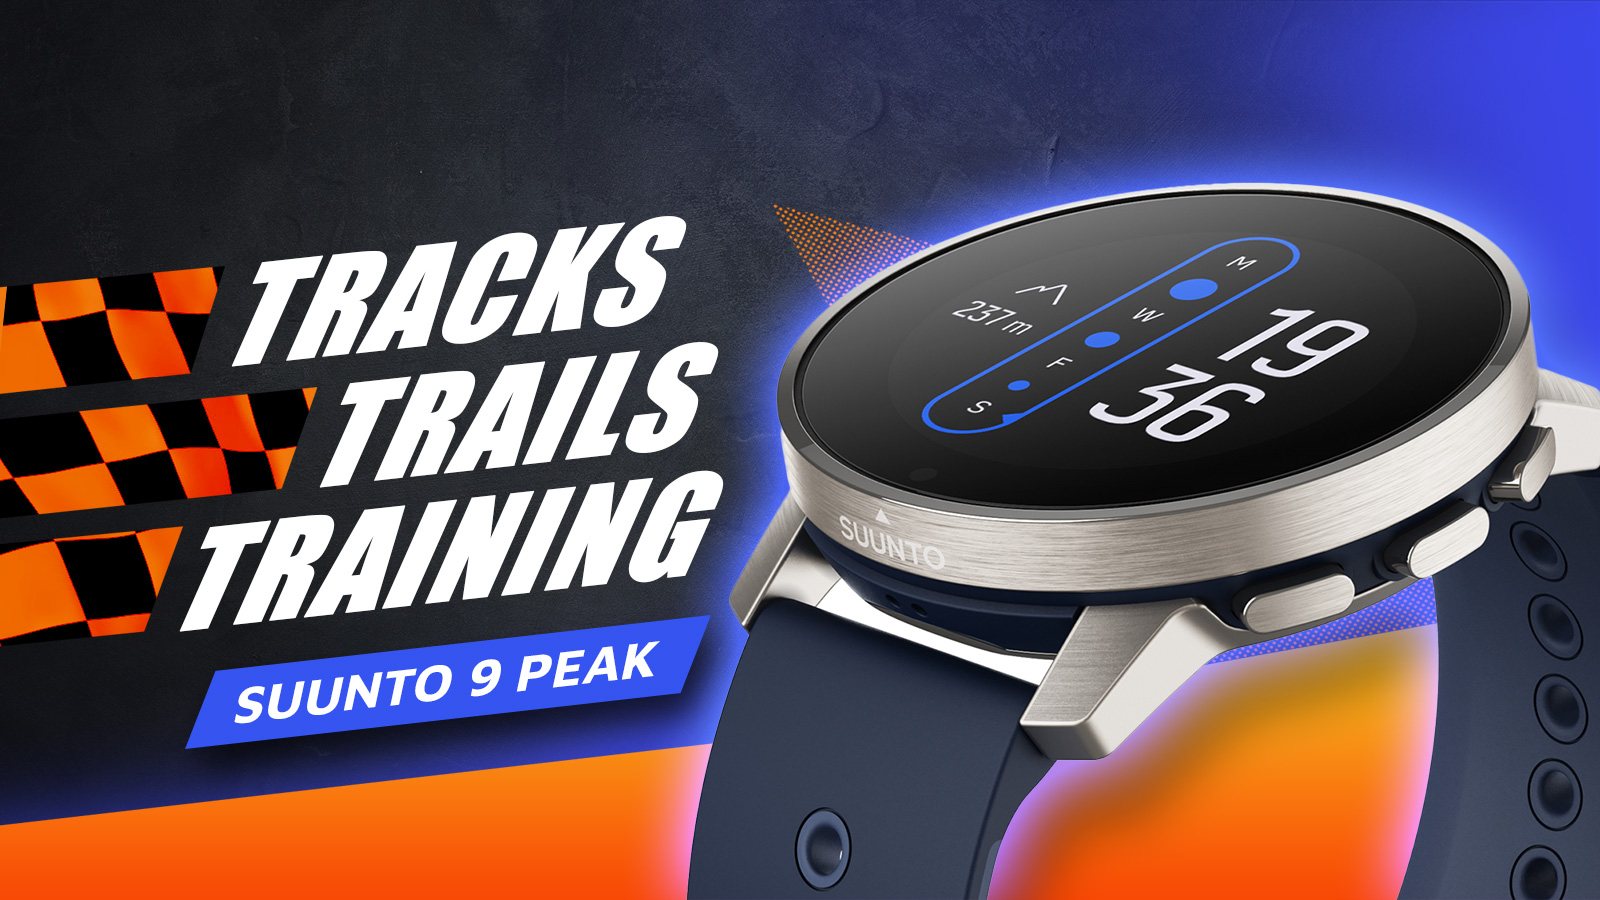 , Suunto 9 Peak review: Tracks, Trails, Training